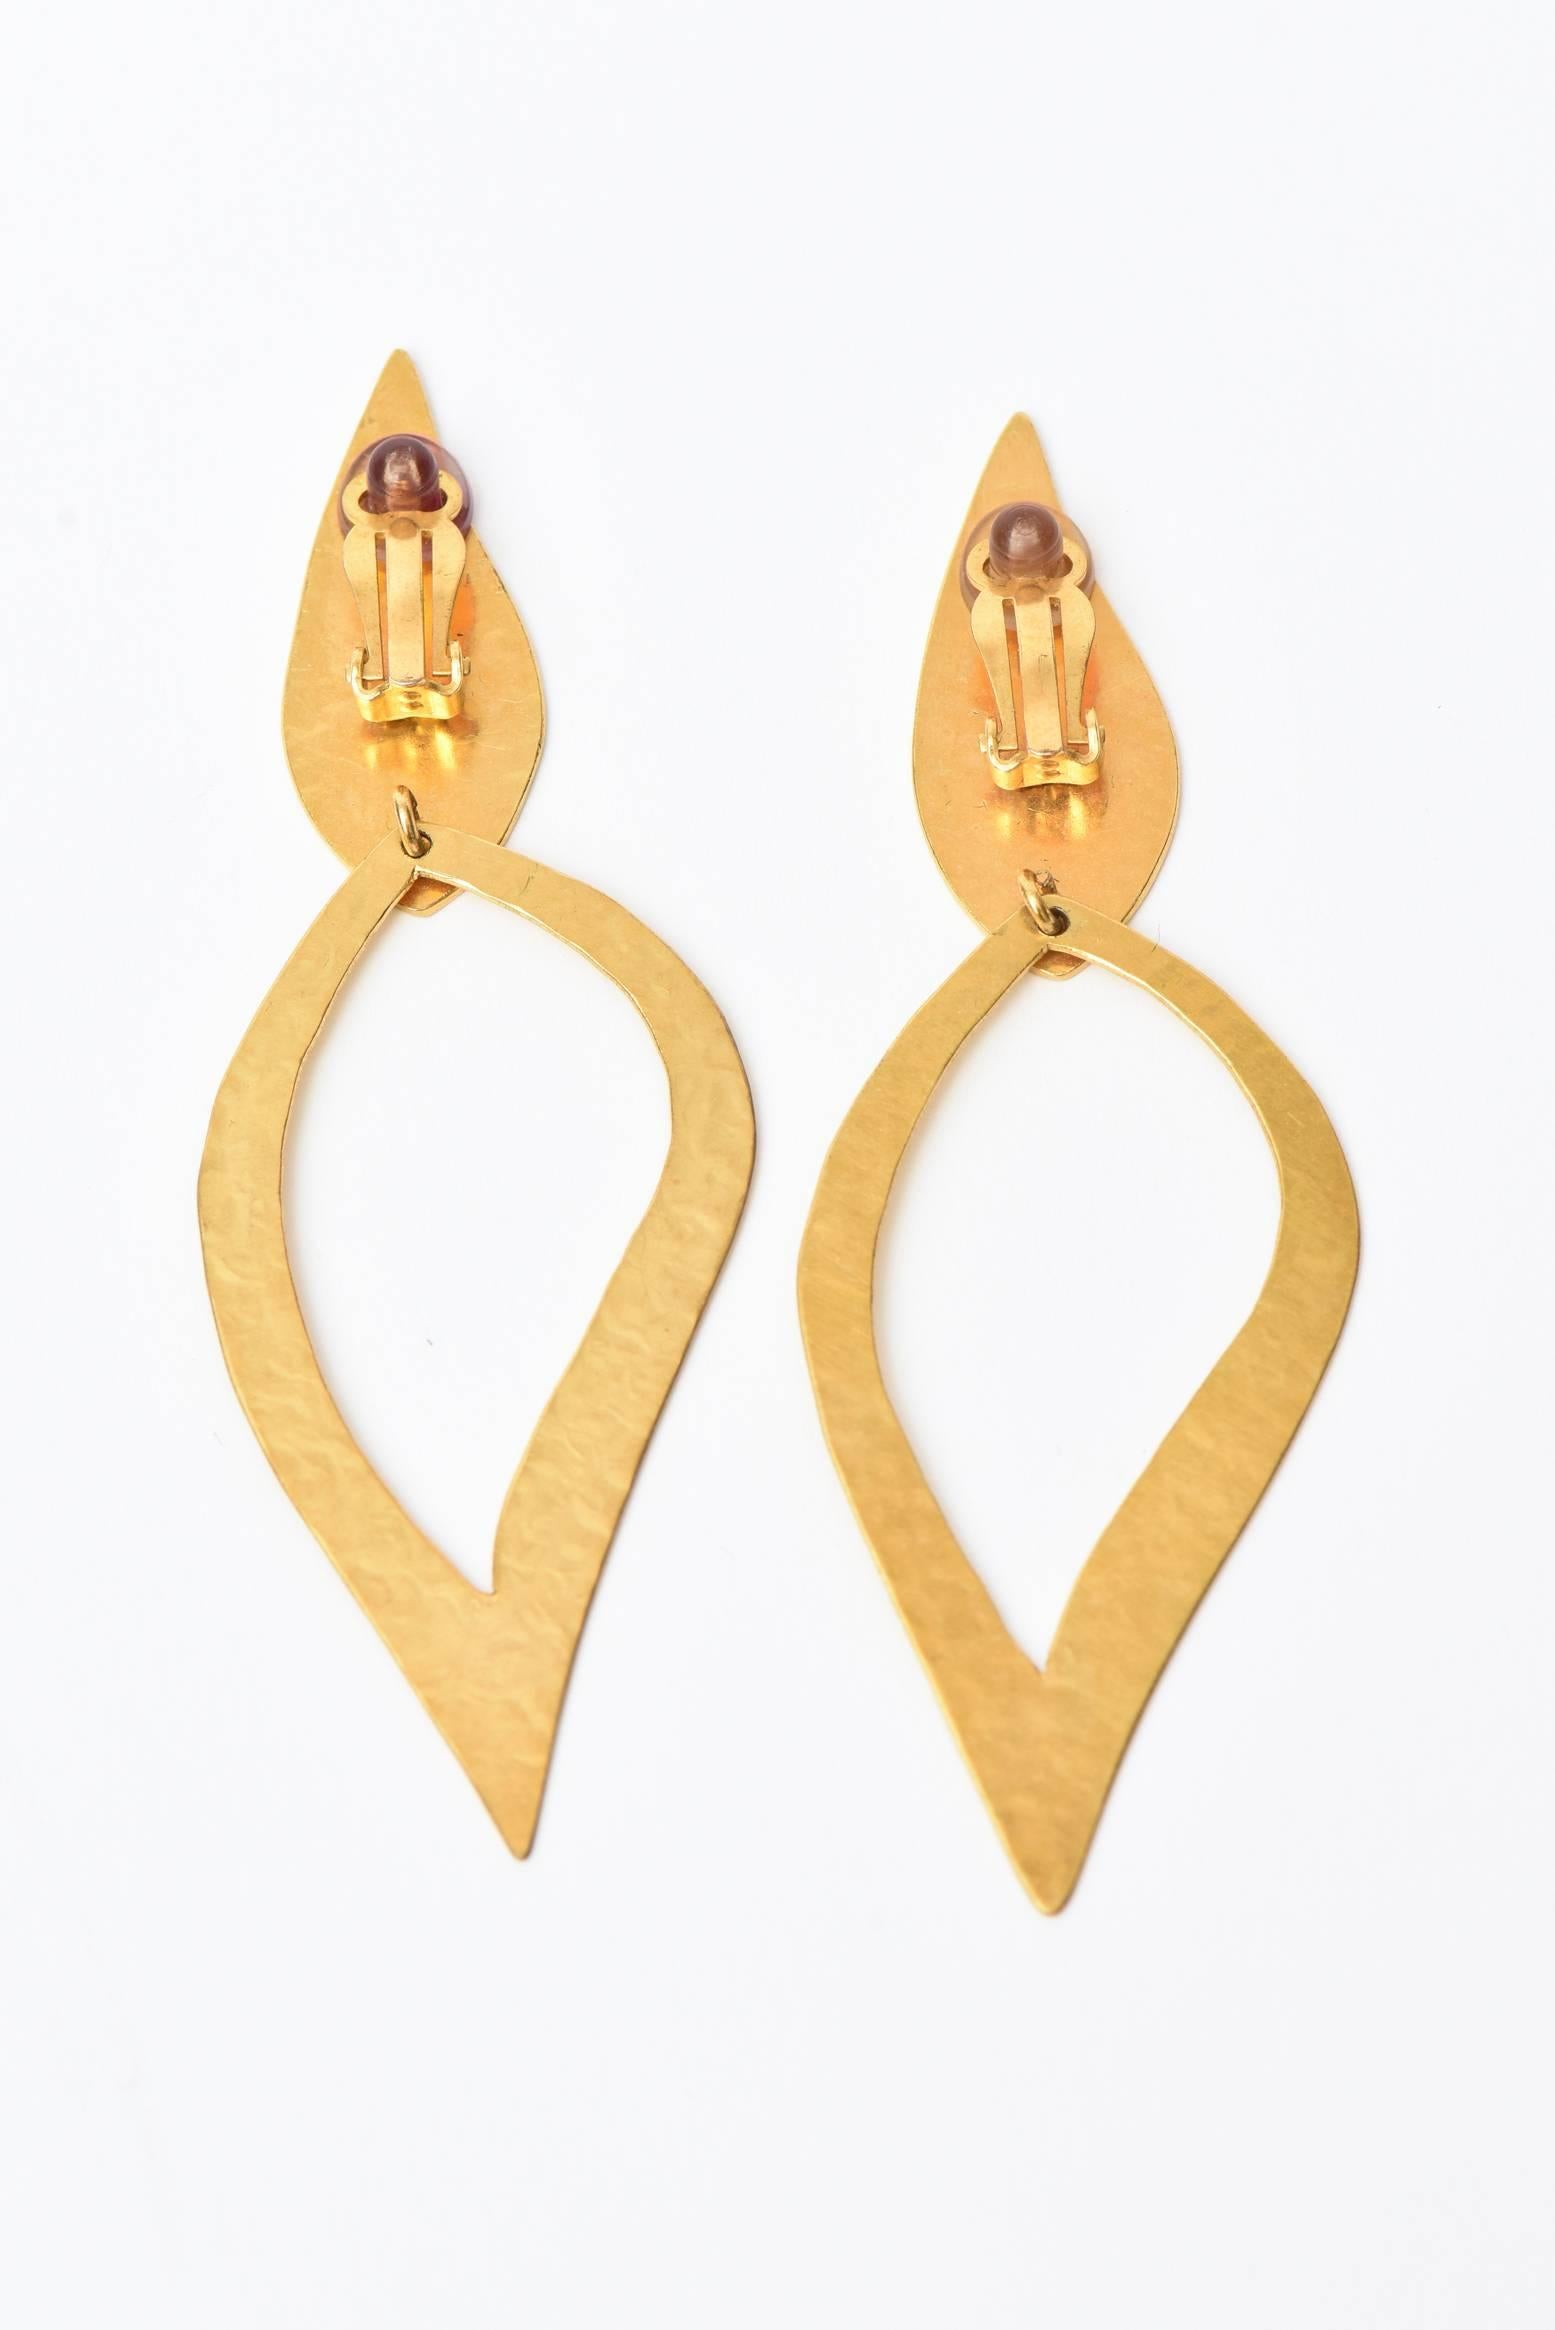 Herve Van Der Straeten Pair of Sculptural Gold Plated Hallmarked Earrings 2